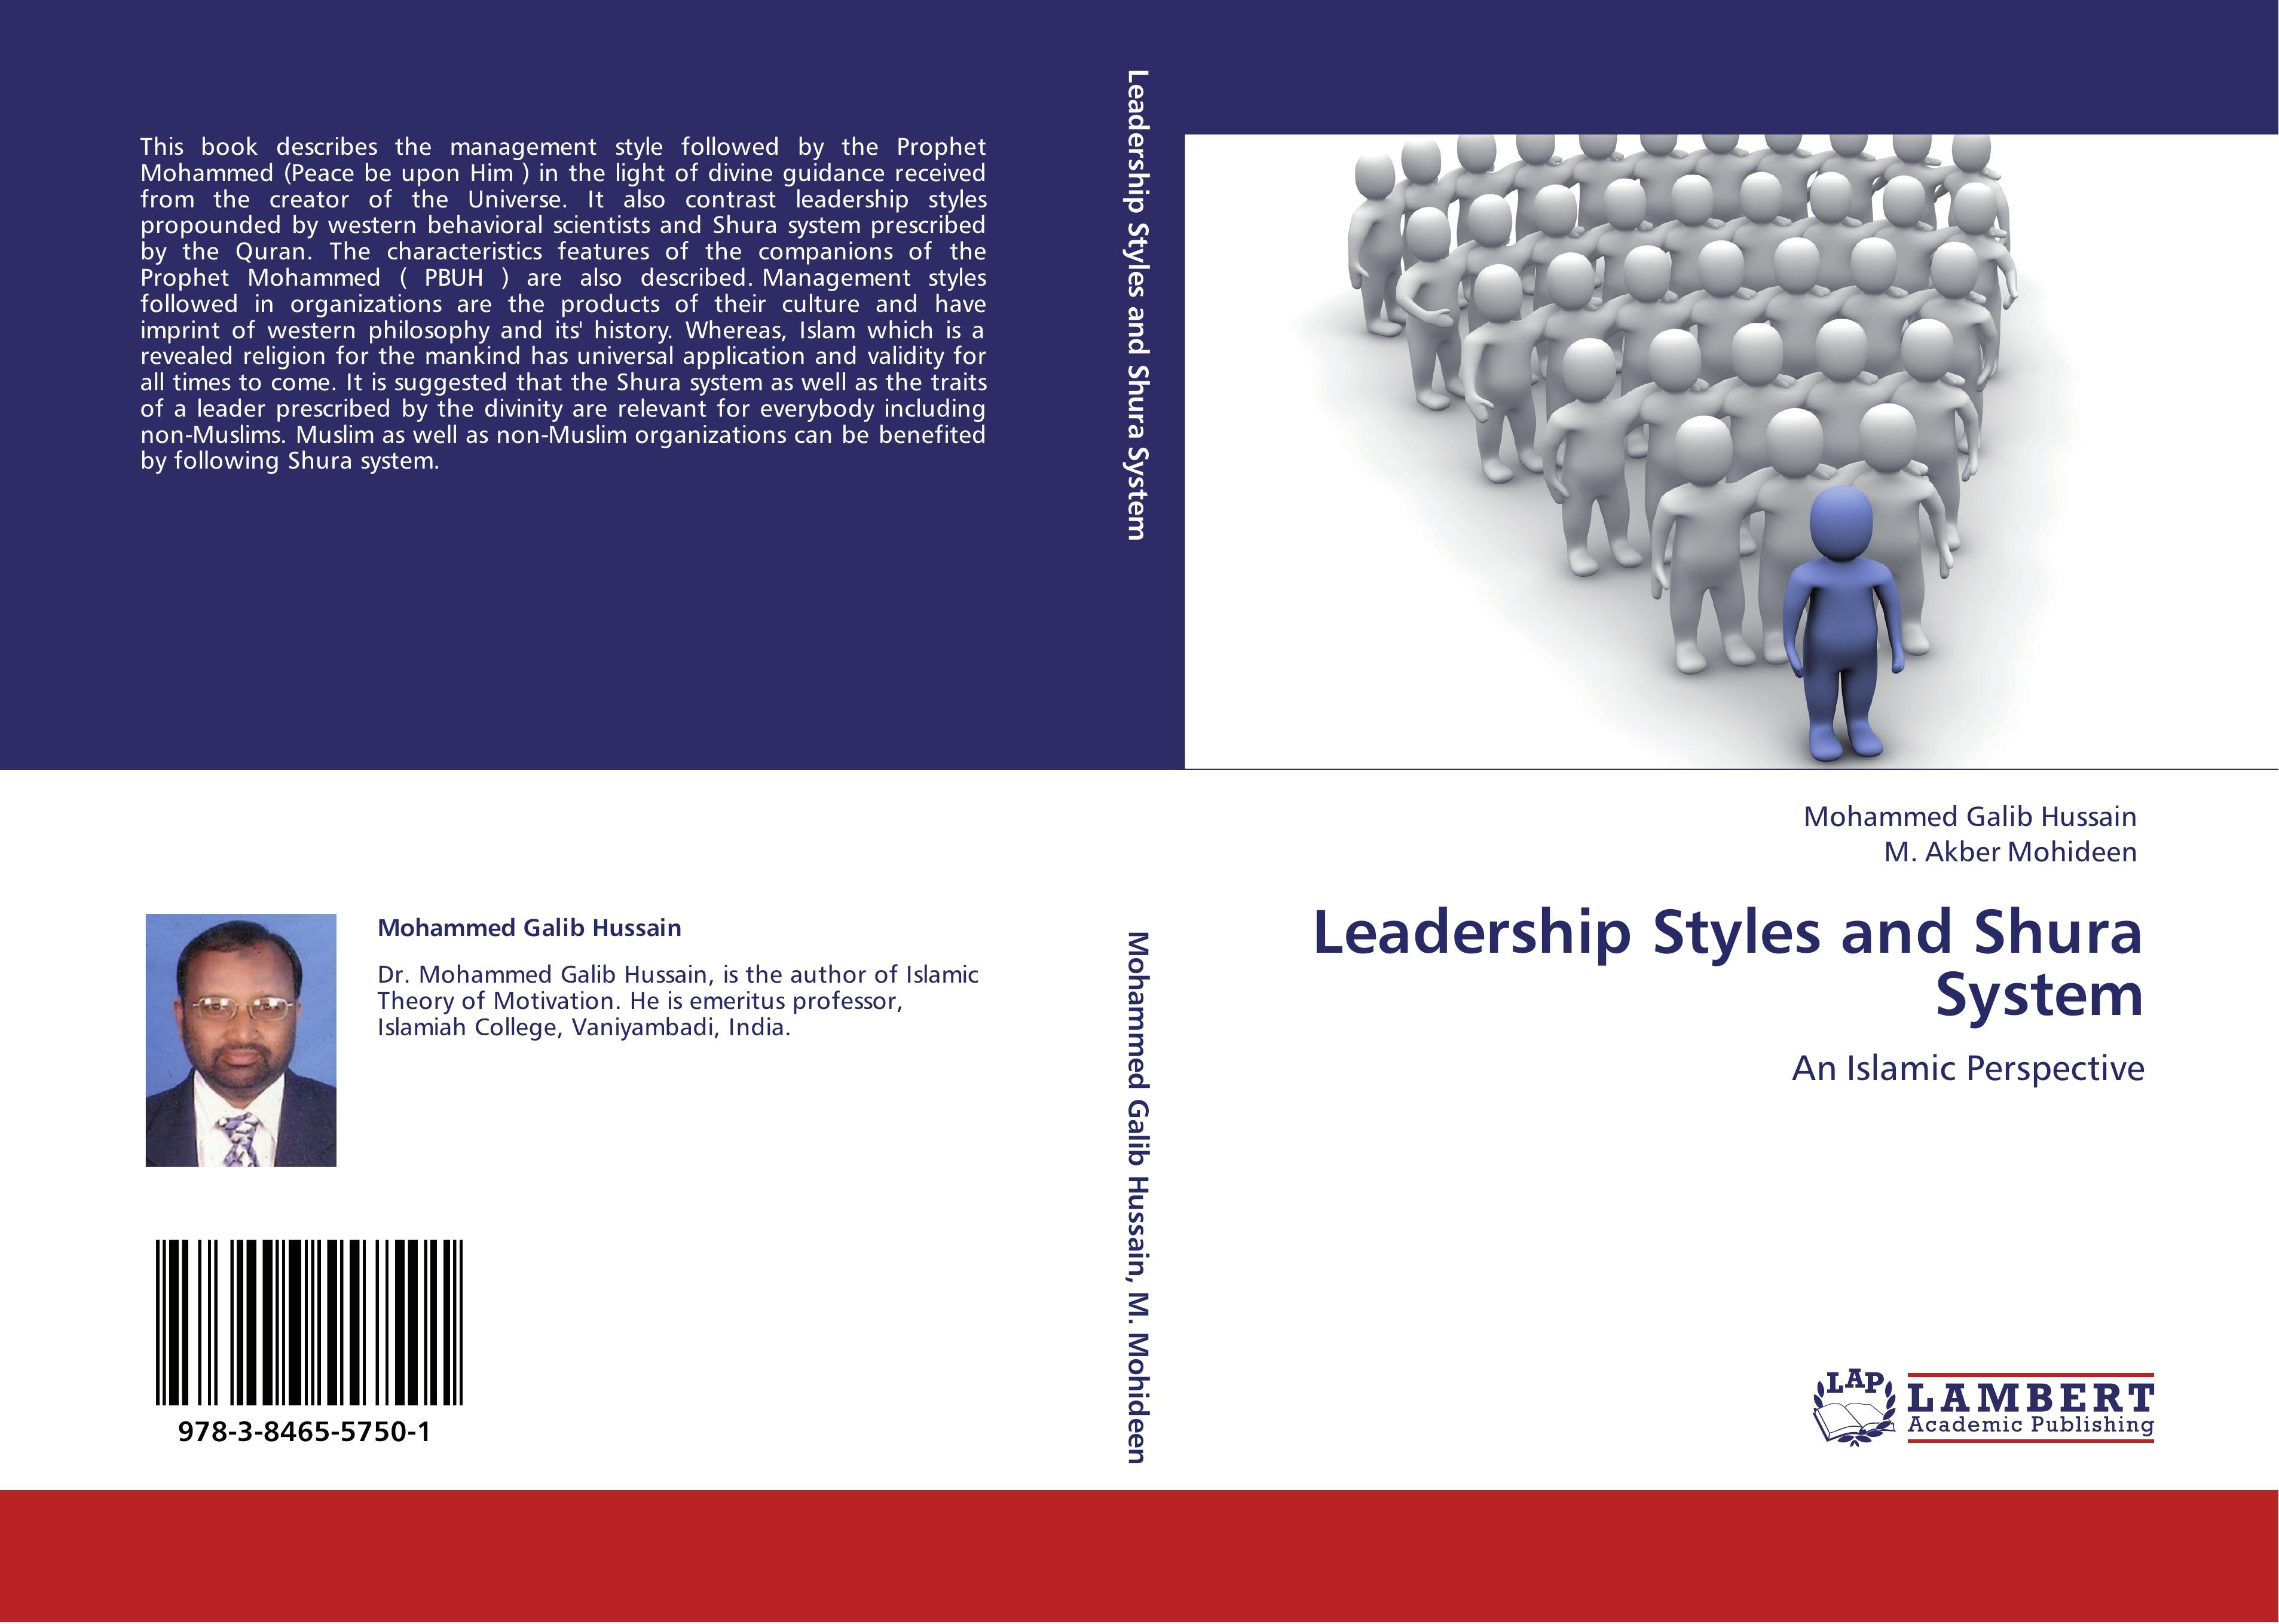 Leadership Styles and Shura System / An Islamic Perspective / Mohammed Galib Hussain (u. a.) / Taschenbuch / Paperback / 212 S. / Englisch / 2011 / LAP LAMBERT Academic Publishing / EAN 9783846557501 - Hussain, Mohammed Galib